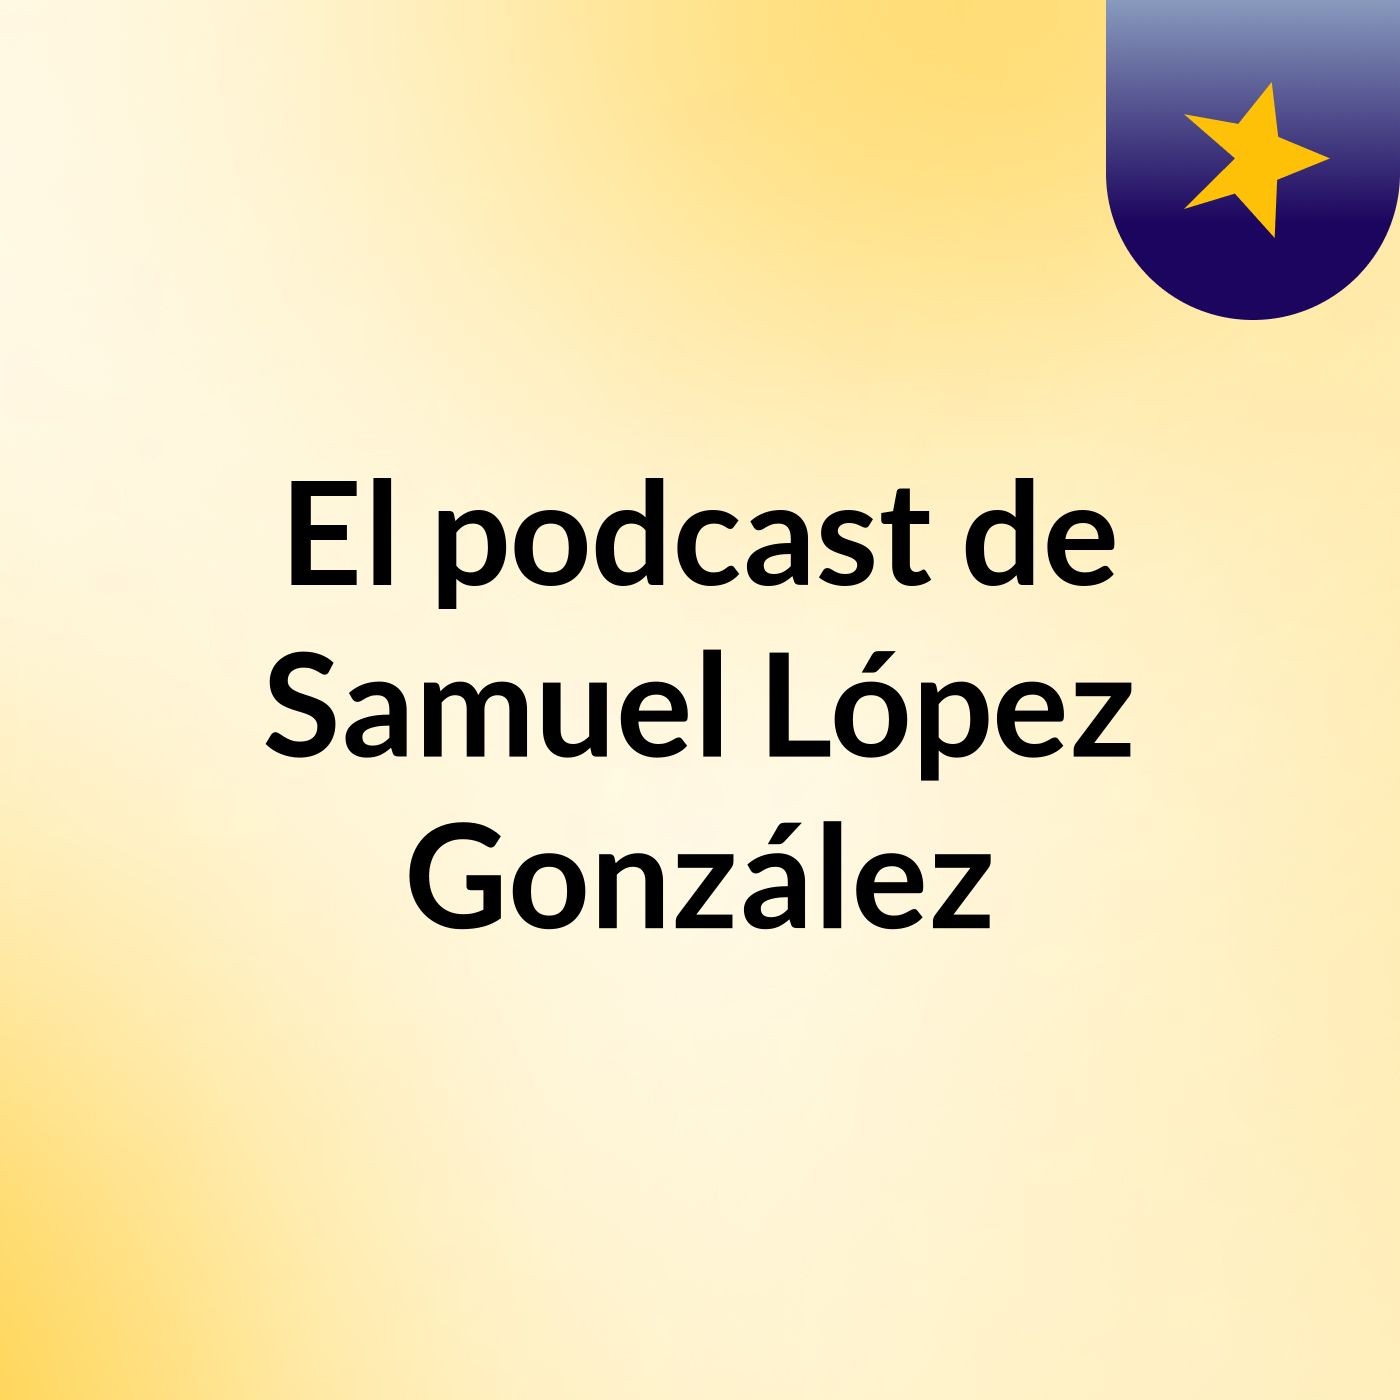 El podcast de Samuel López González